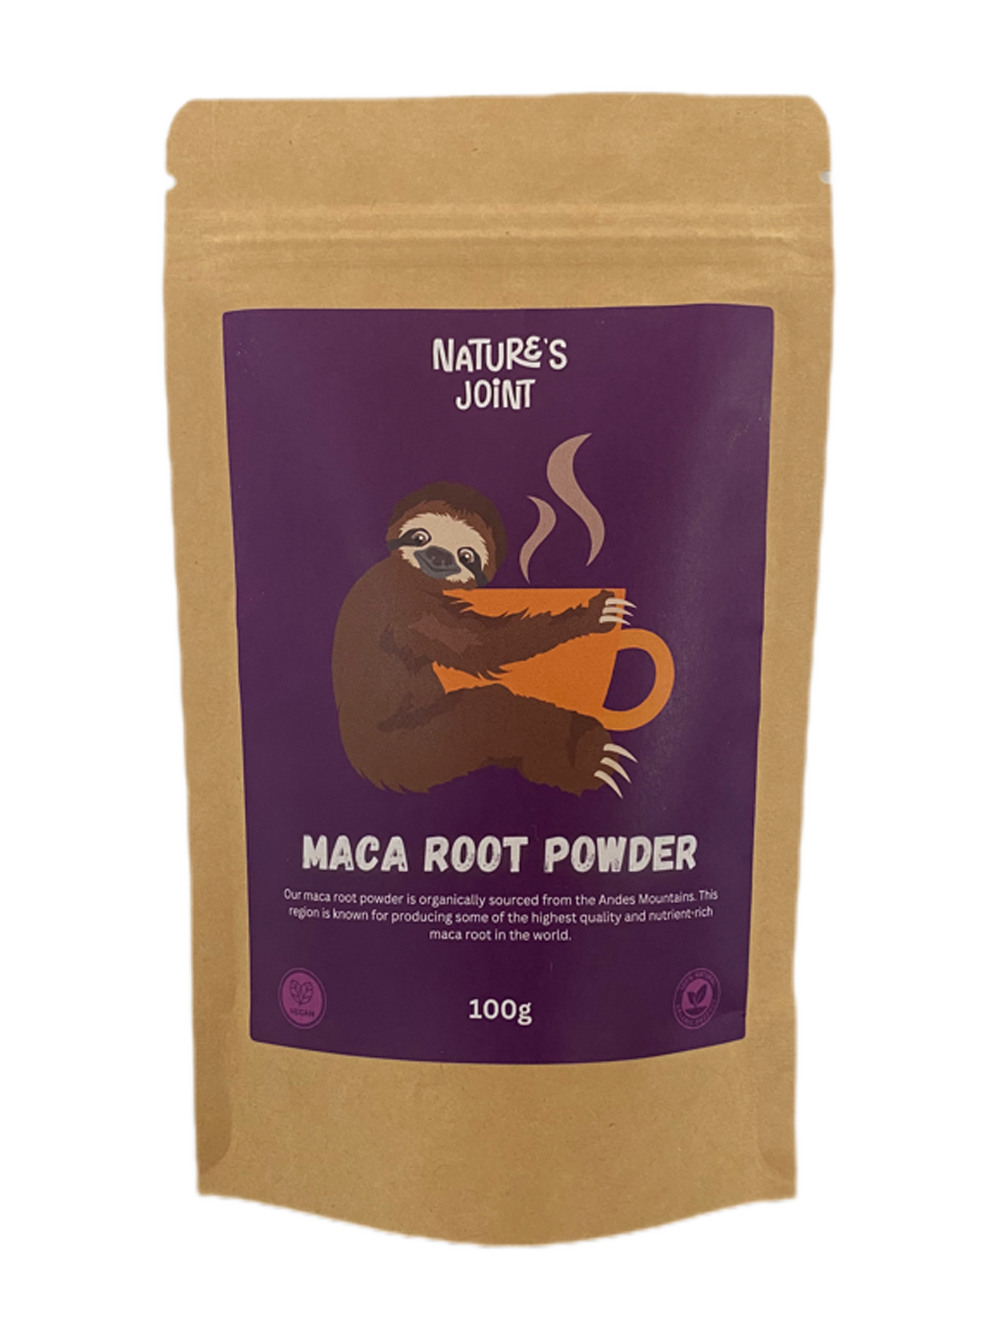 Maca Root Powder image